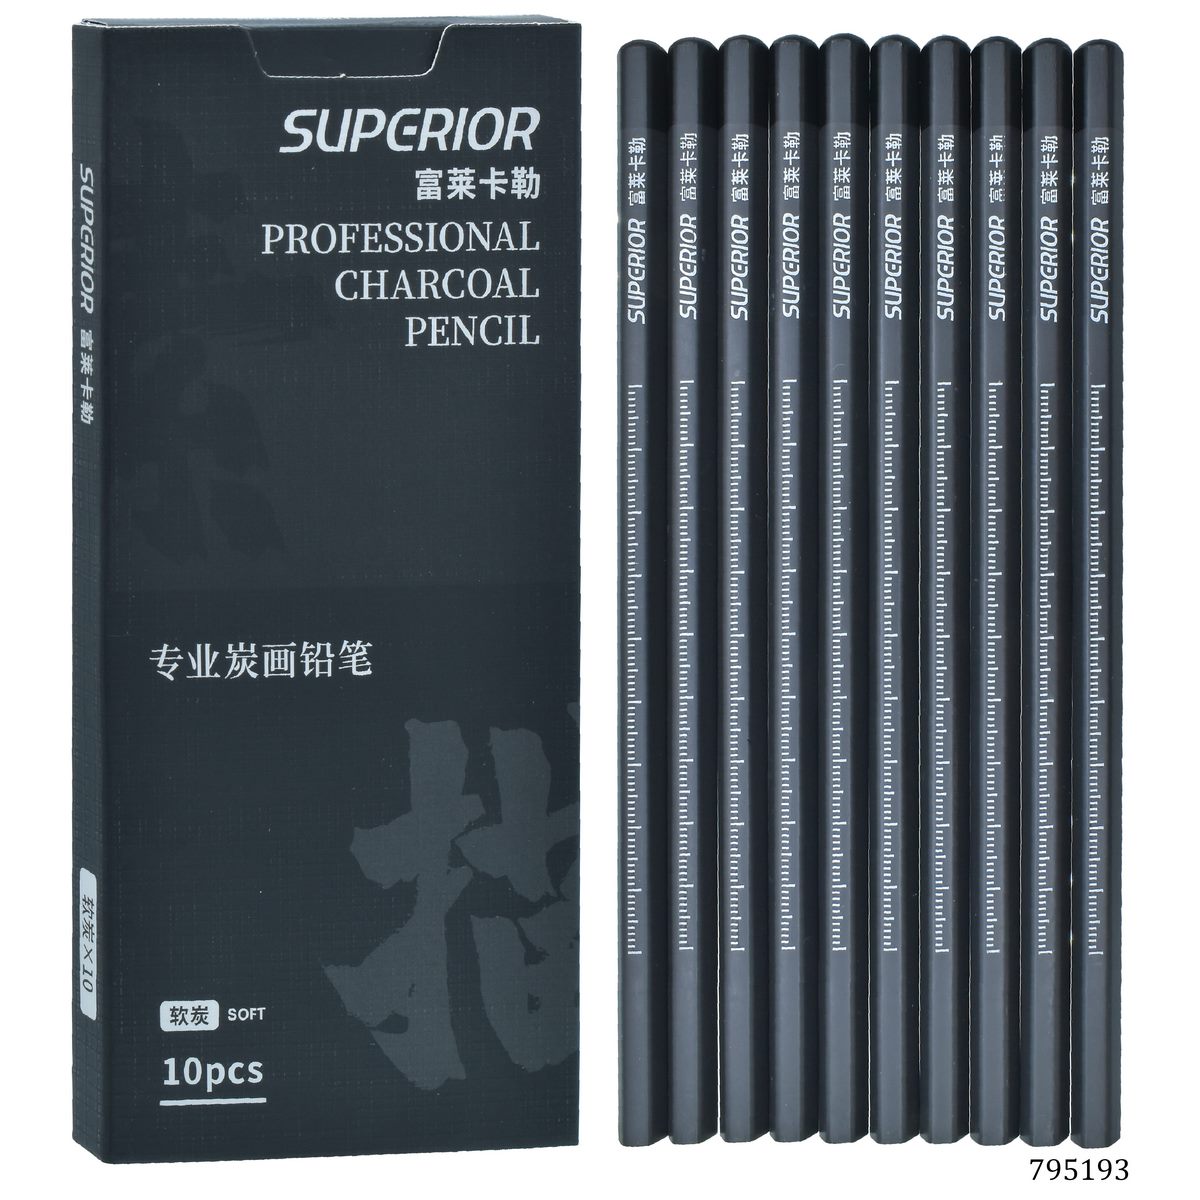 jags-mumbai Pencil Superior Profesional Chorcoal Pencil 10Pcs Soft 795193